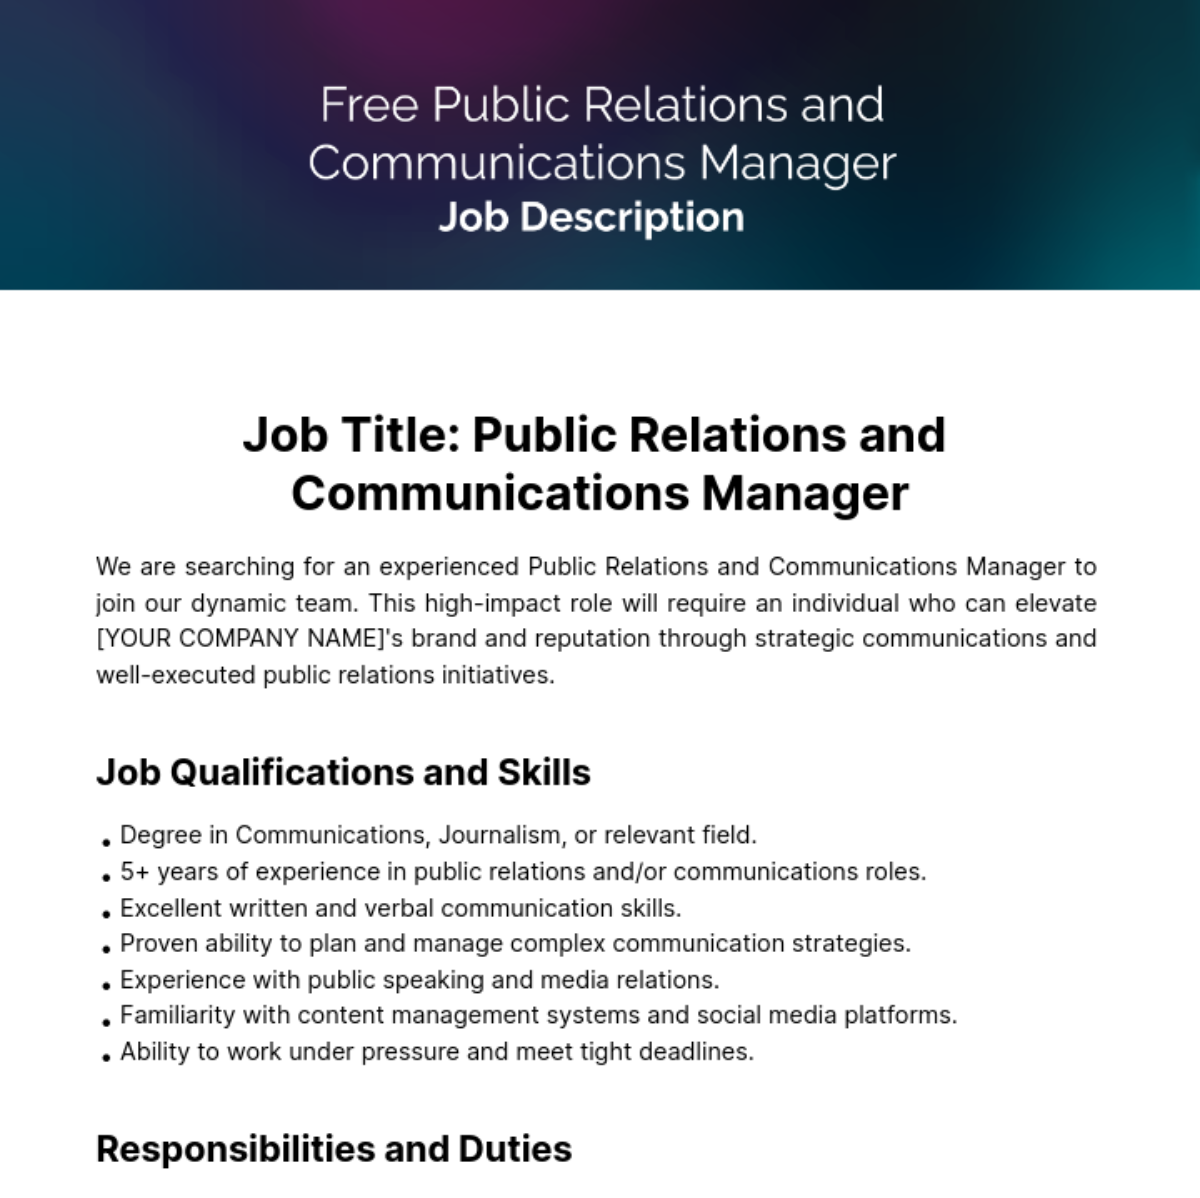 Public Relations (PR) and Communications Manager Job Description Template